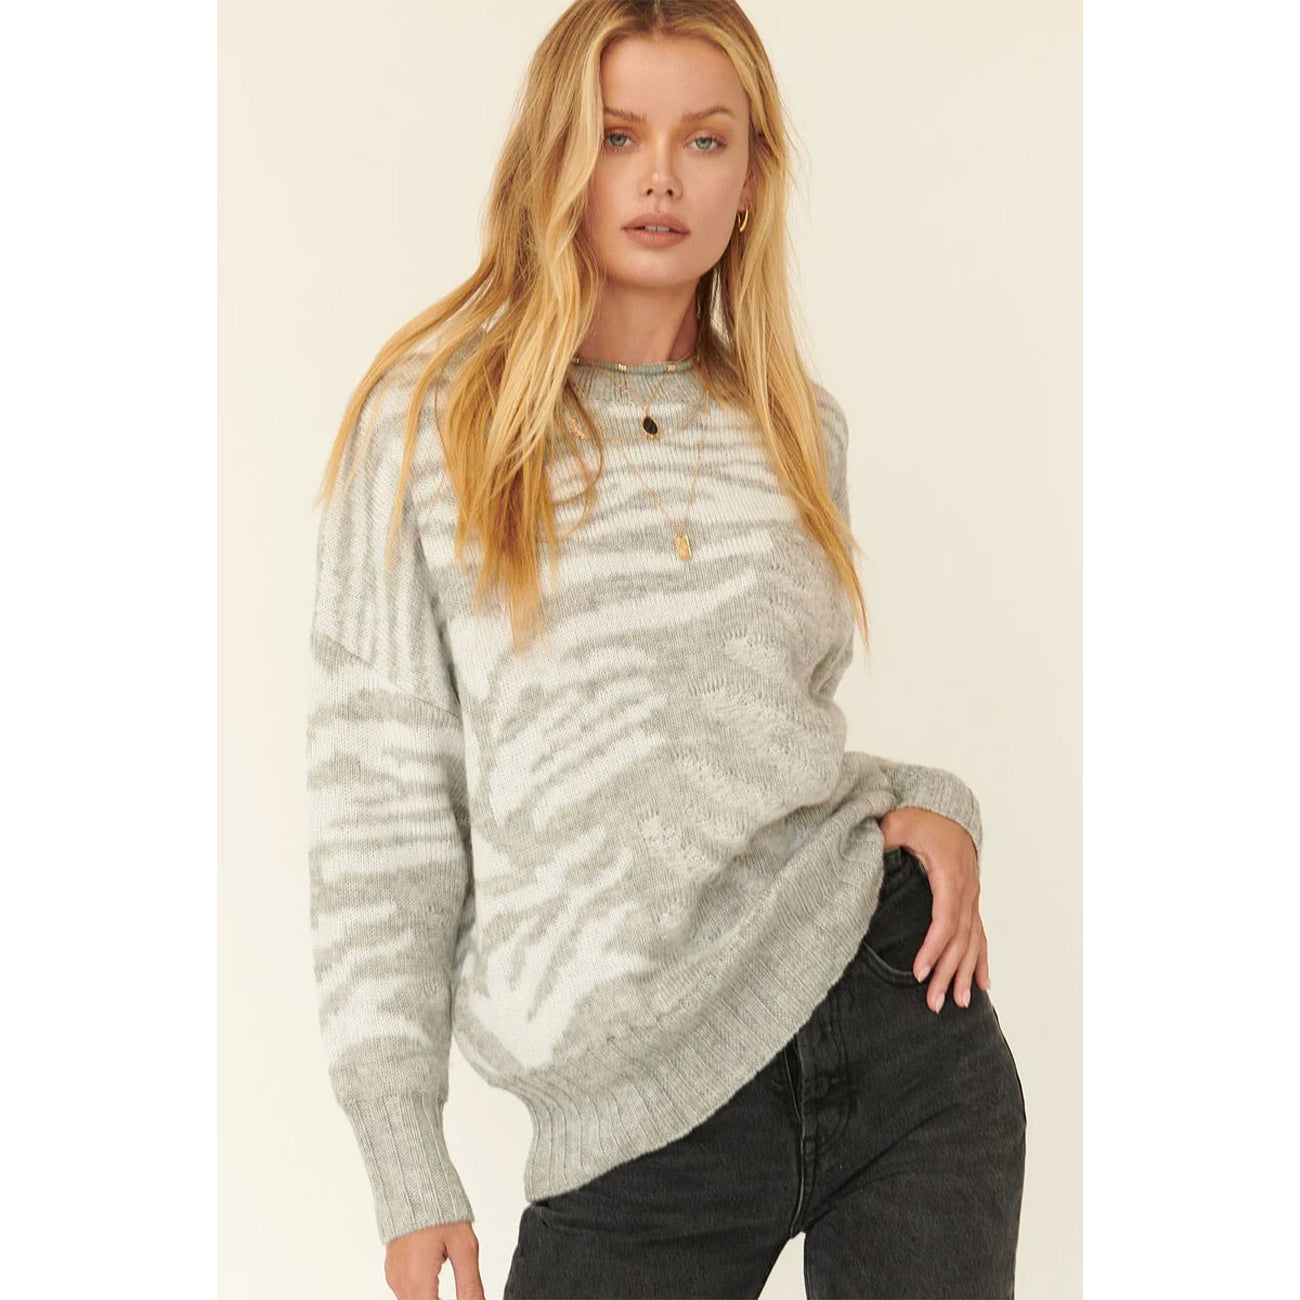 Zebra Print Pullover Crew Neckline Oversize Sweater